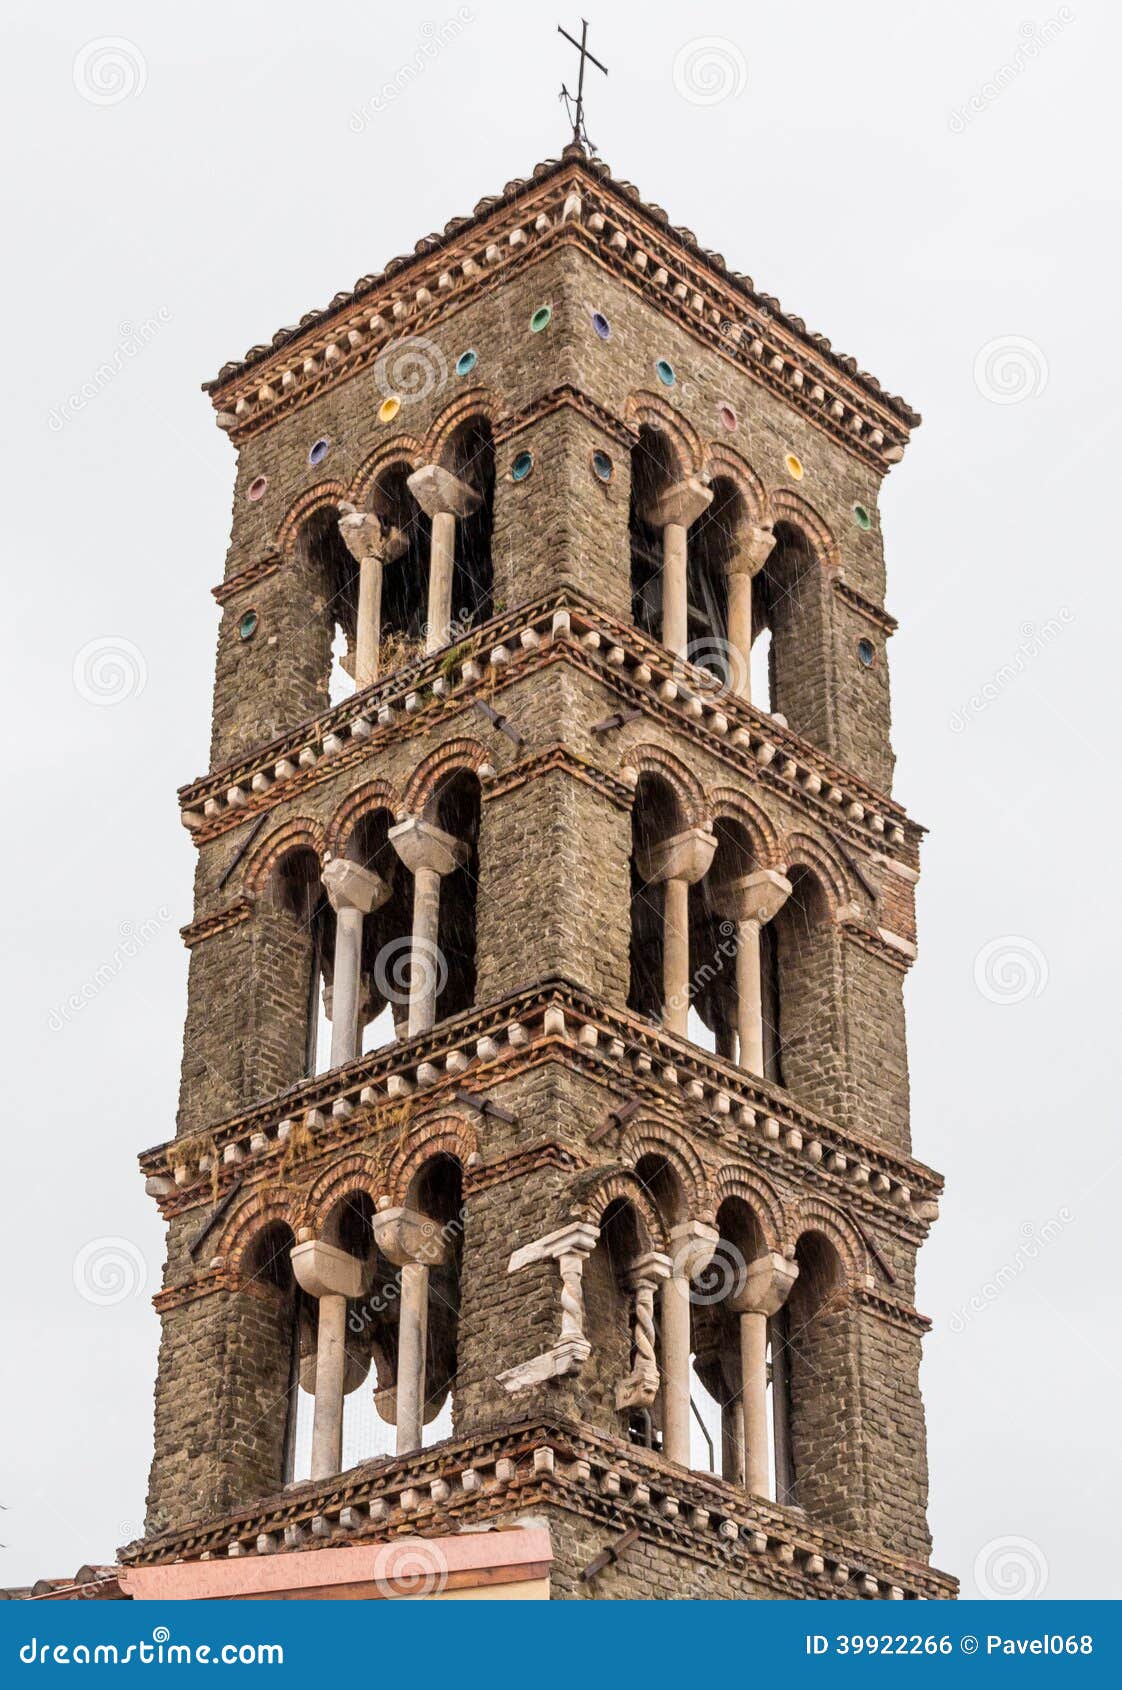 tower in frascati, castelli romani, italy